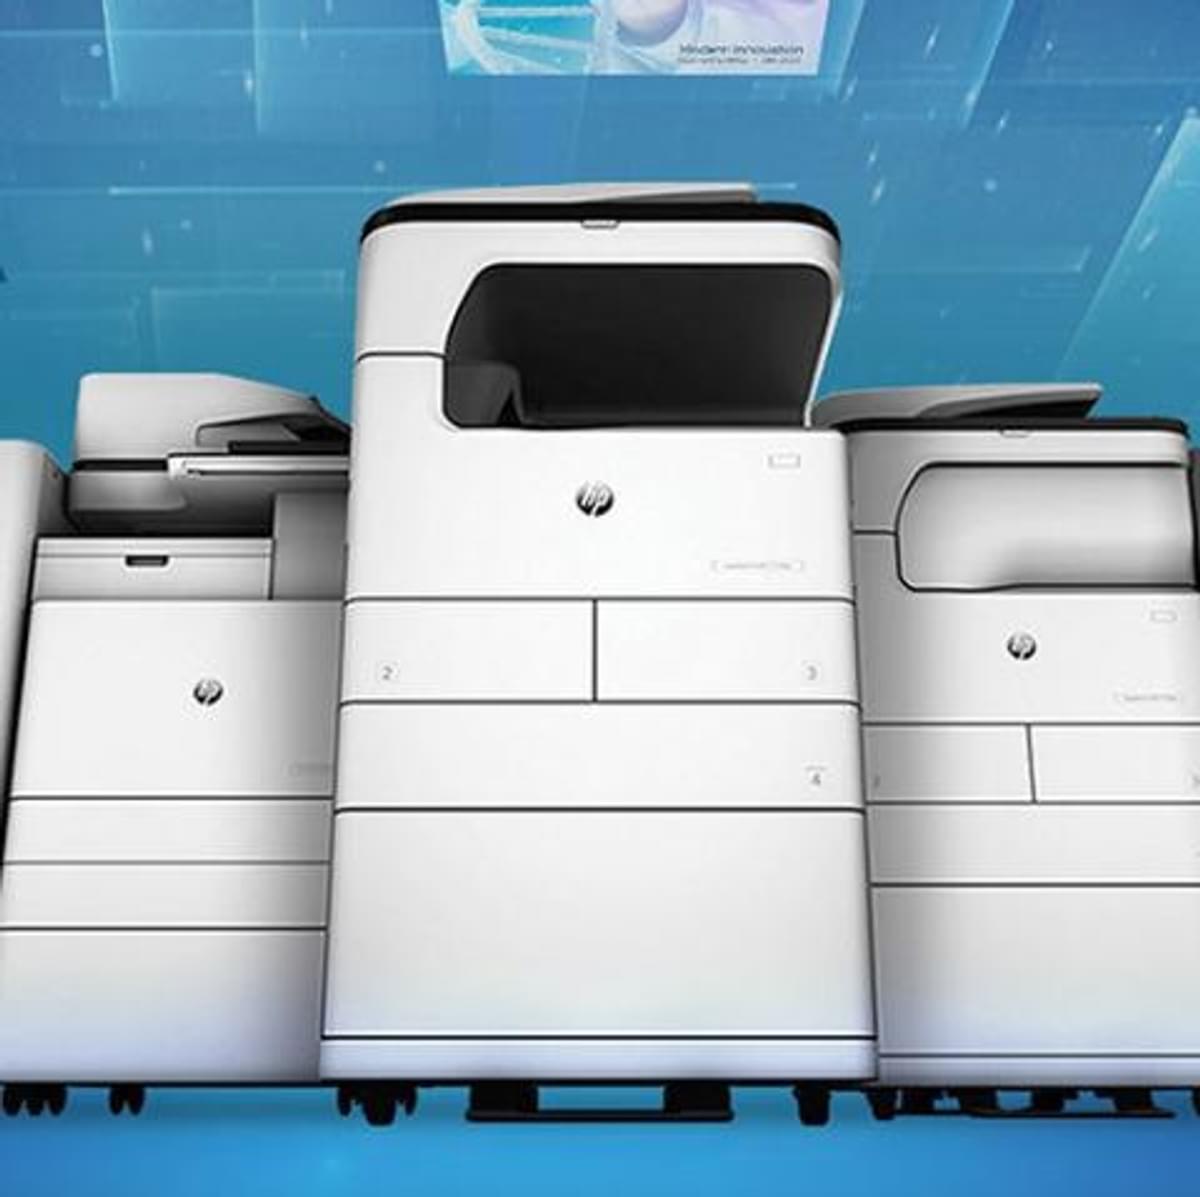 HP introduceert nieuwe A3 printers met ingebouwde security image